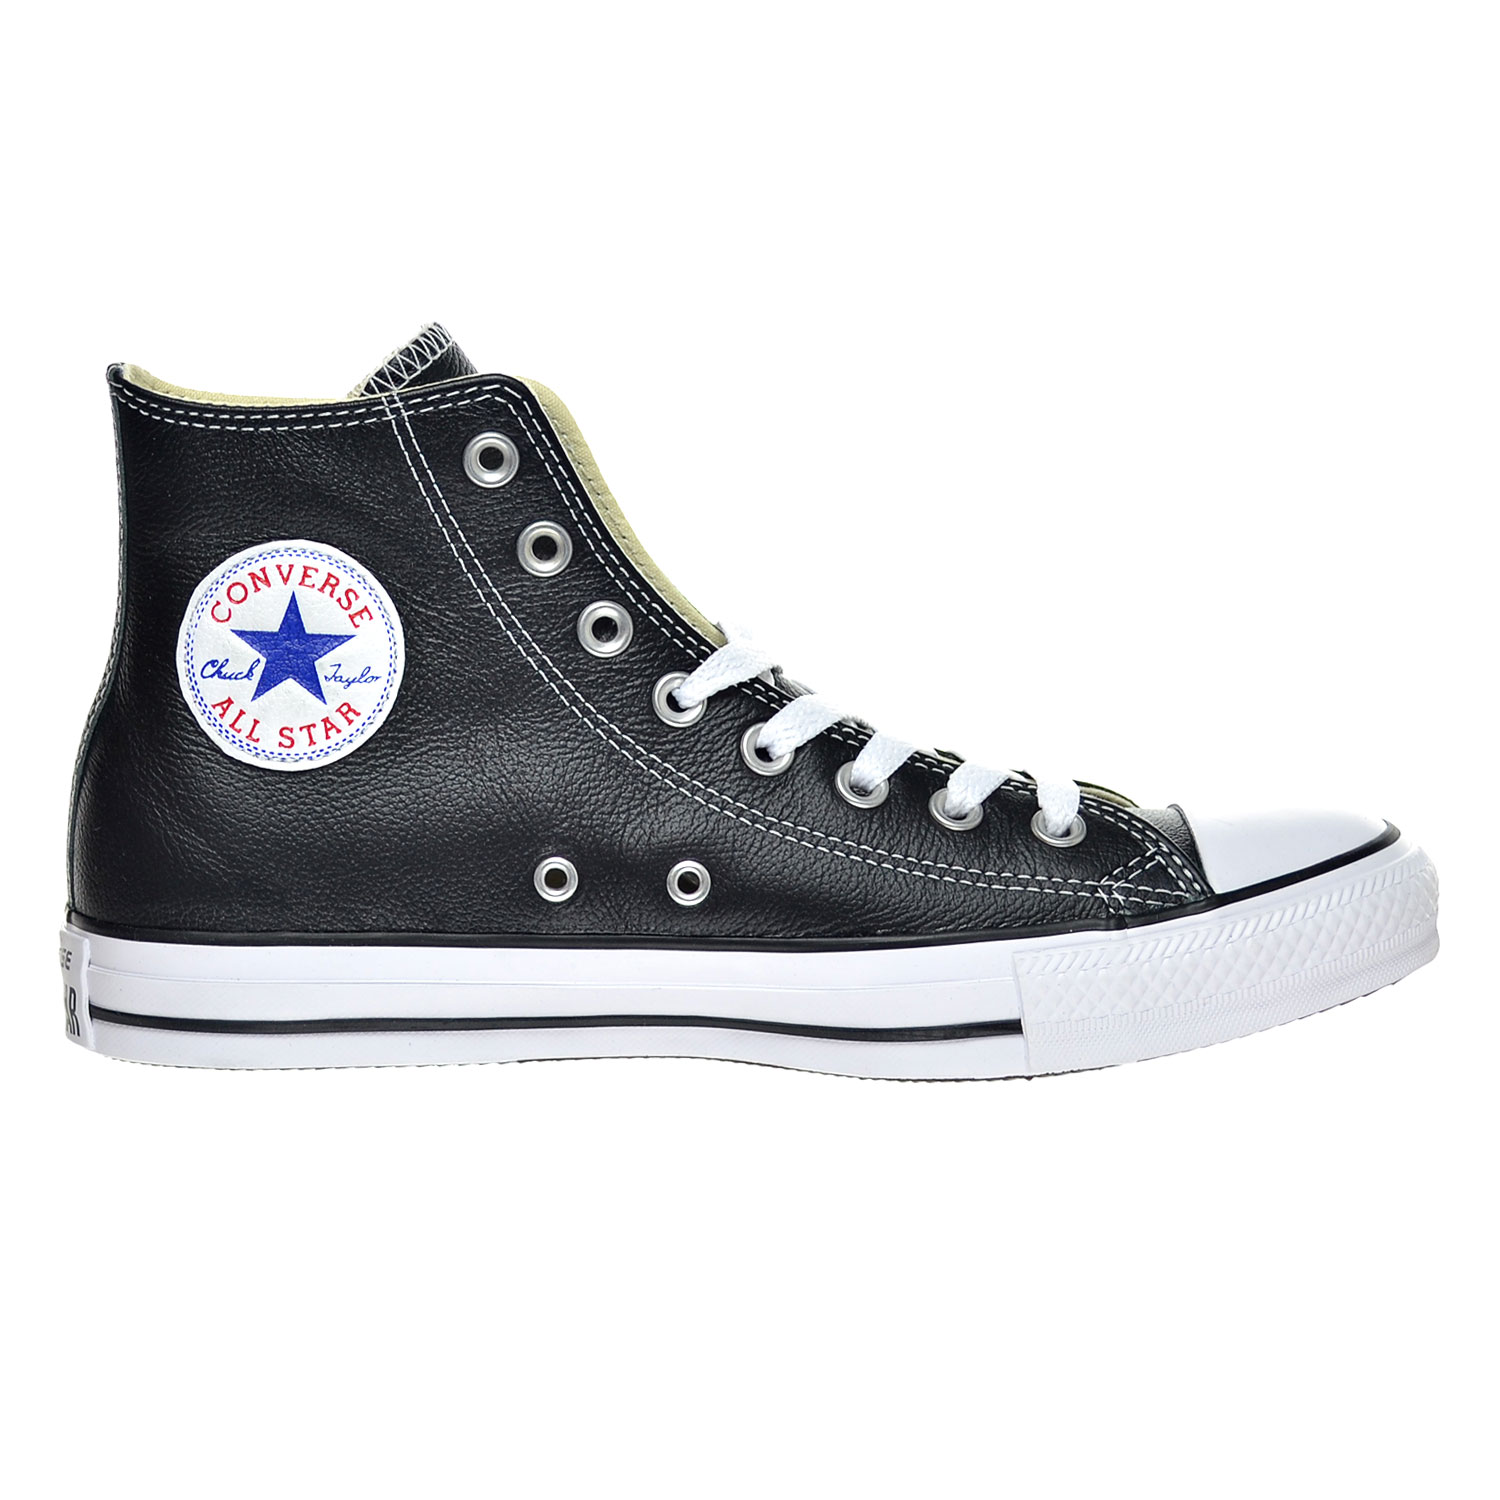 Converse Chuck Taylor HI Men's Shoe Black All Star High Top Sneaker 132170c  | eBay